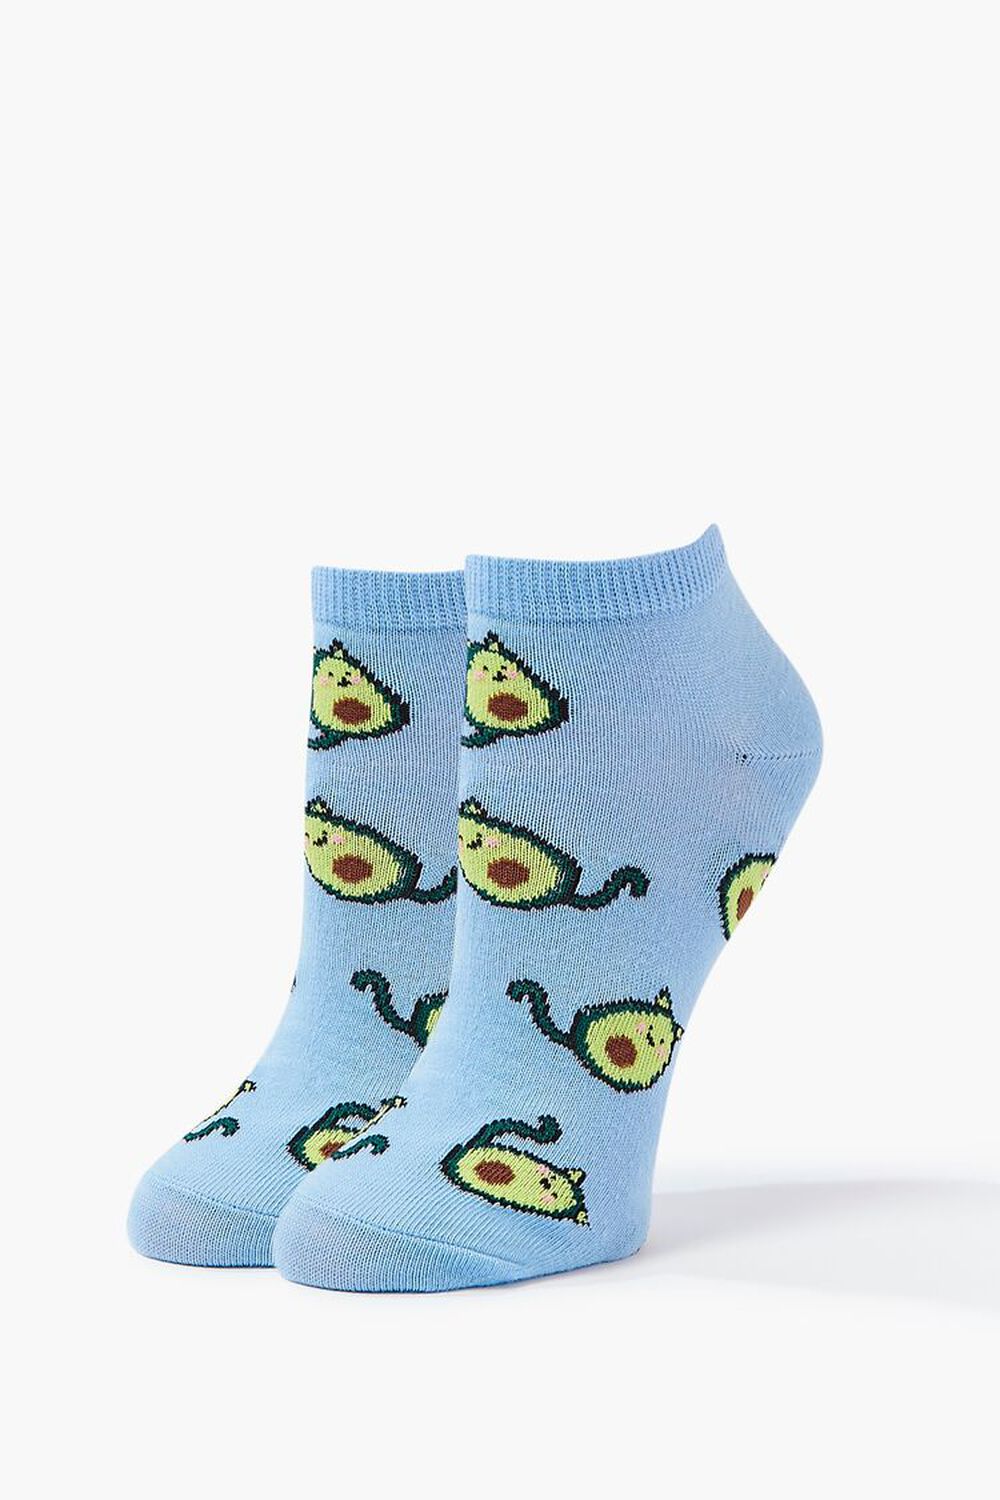 BLUE/MULTI Cat Avocado Print Ankle Socks, image 1